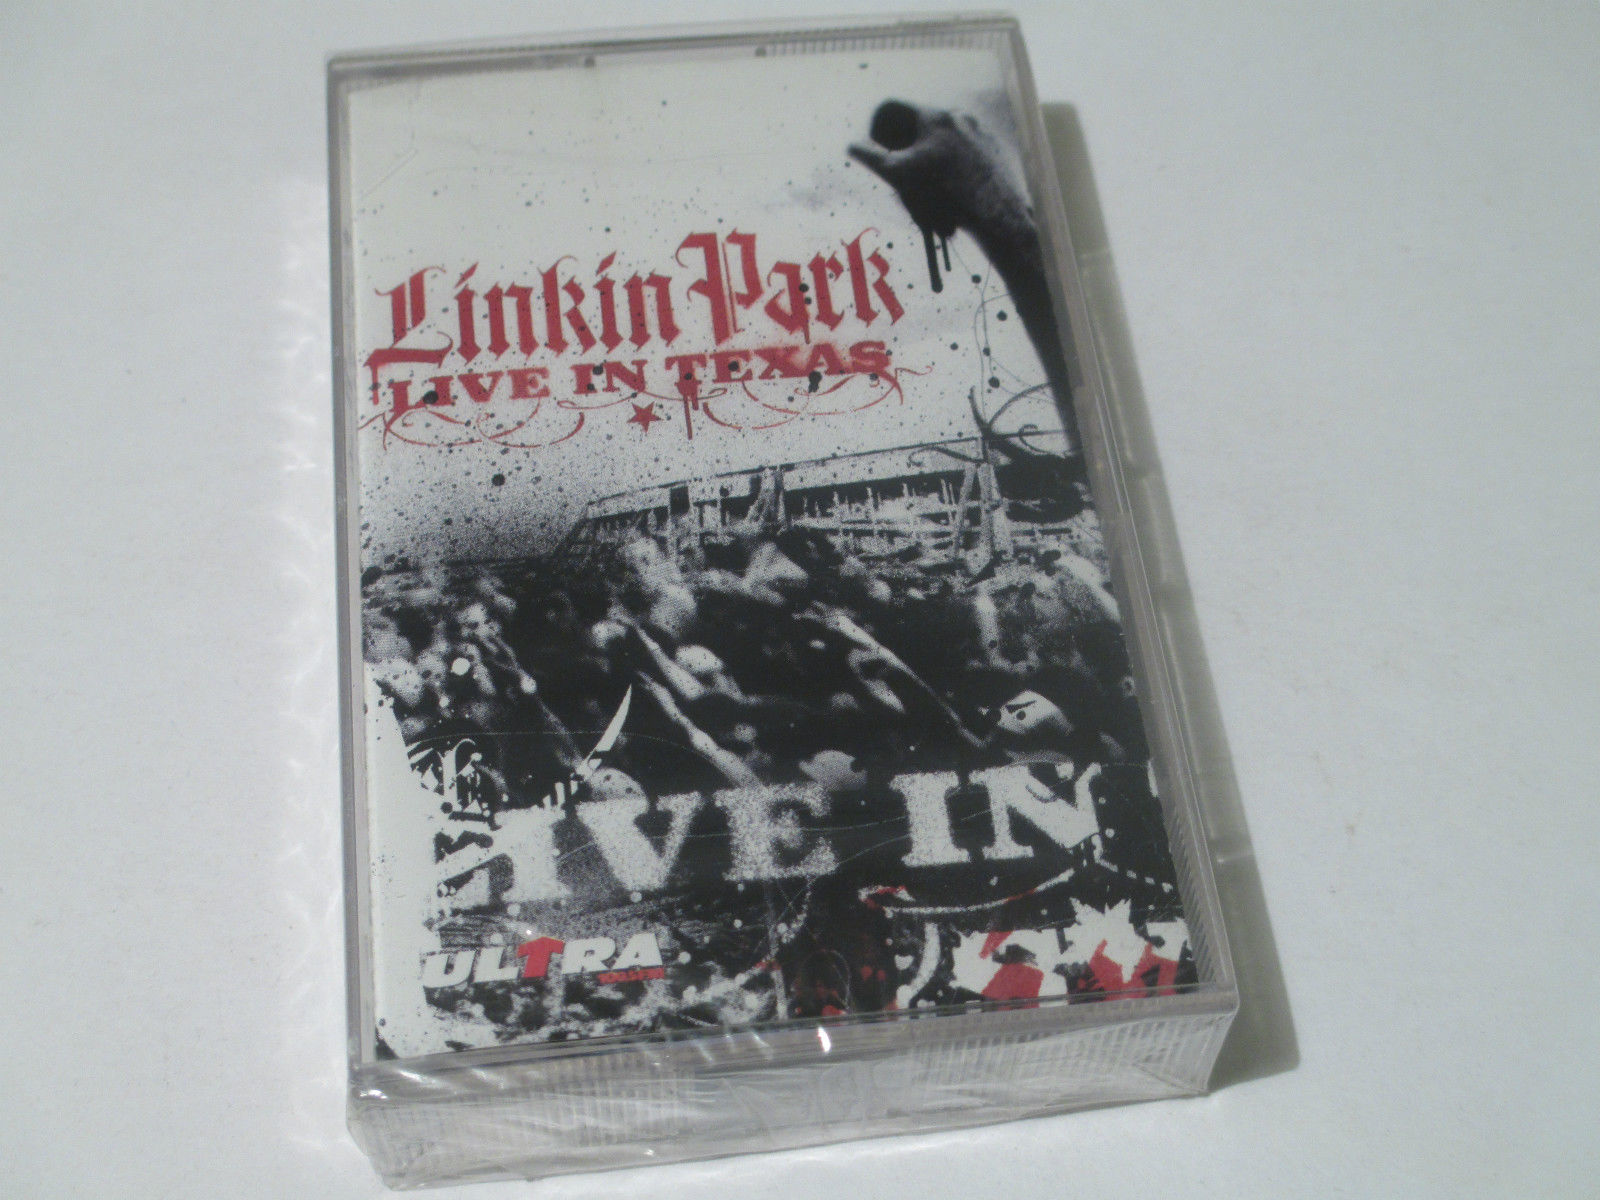 Linkin park Given up [Legendado] #lp #linkinpark #linkinparkfamily #li